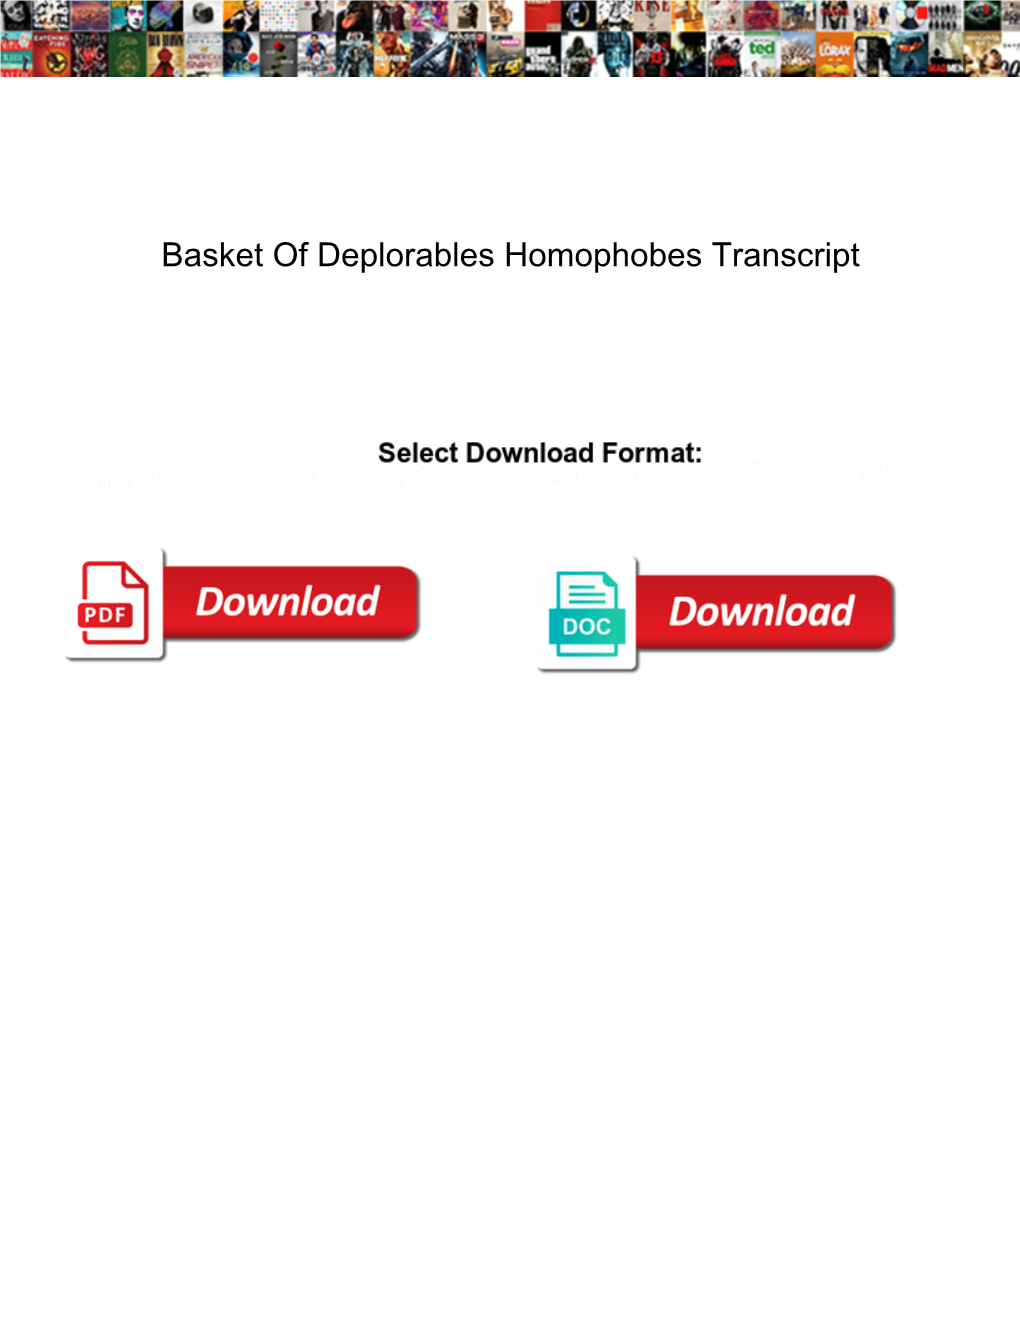 Basket of Deplorables Homophobes Transcript